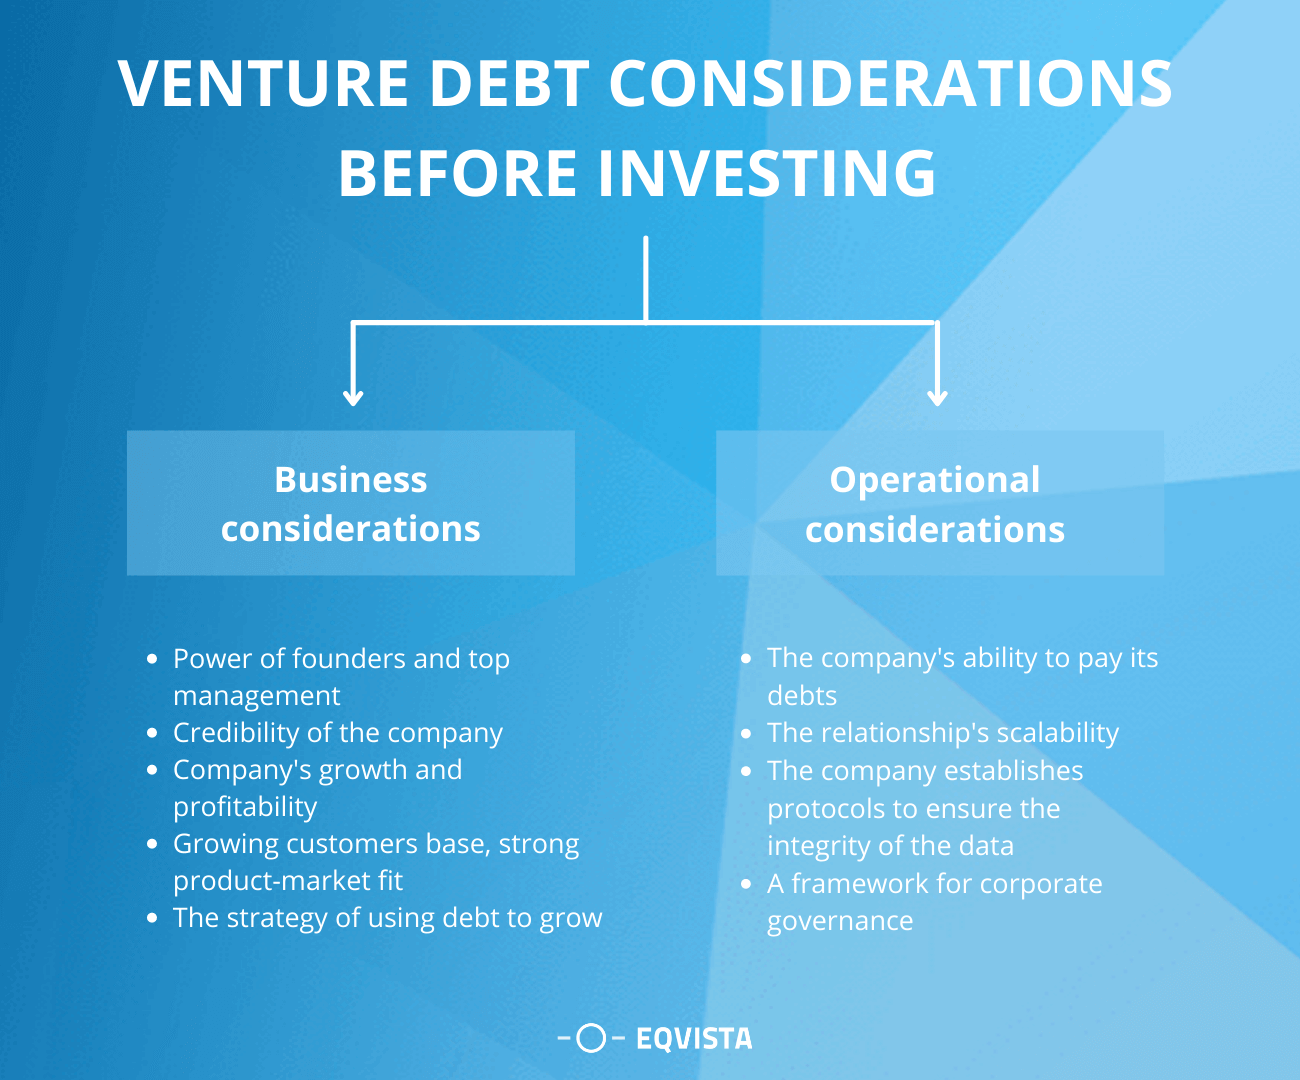 Venture debt consideration before investing